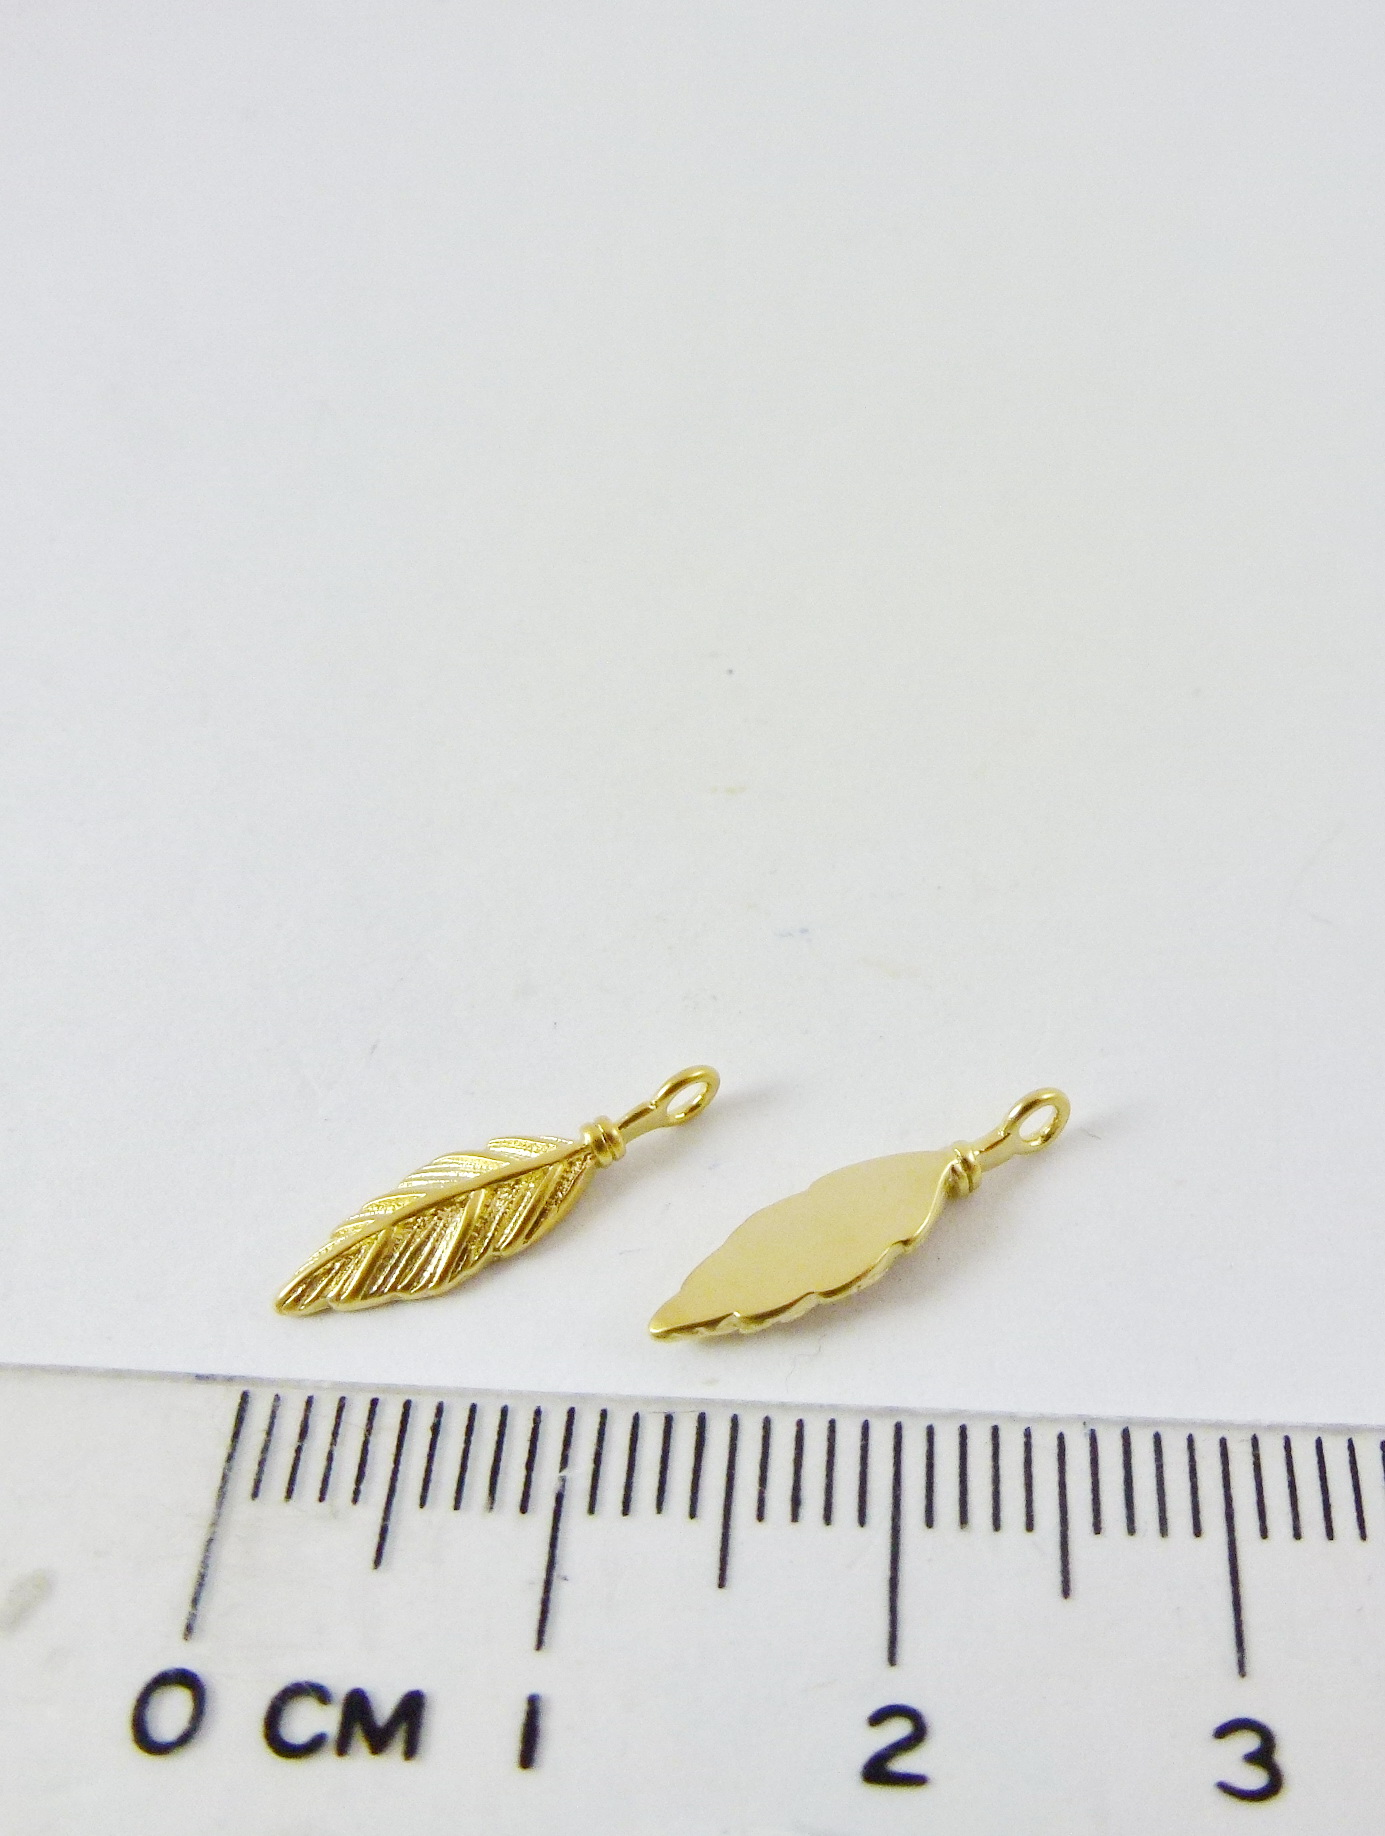 14mm銅鍍霧金色單孔尖羽葉